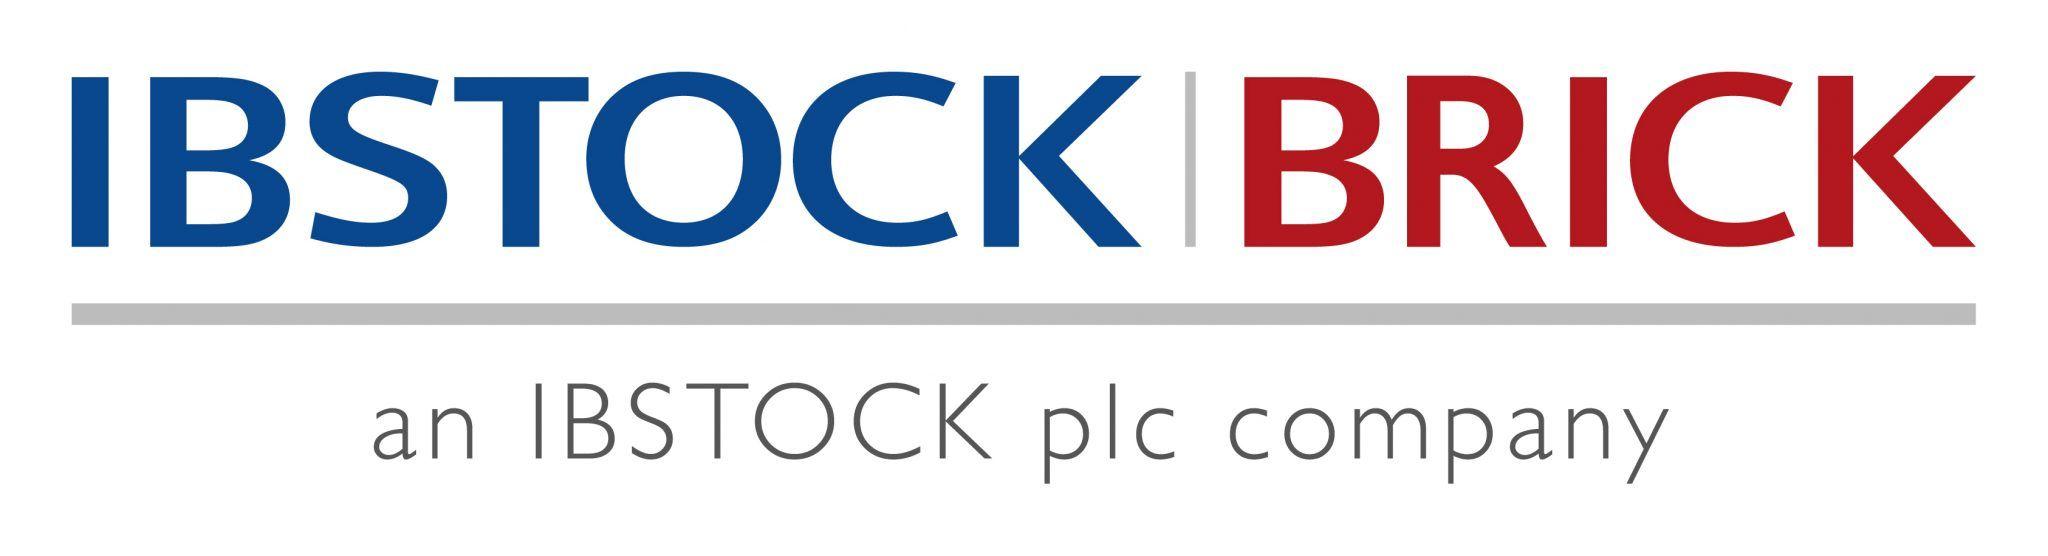 Brick Company Logo - Brick Product Solutions | Ibstock Brick